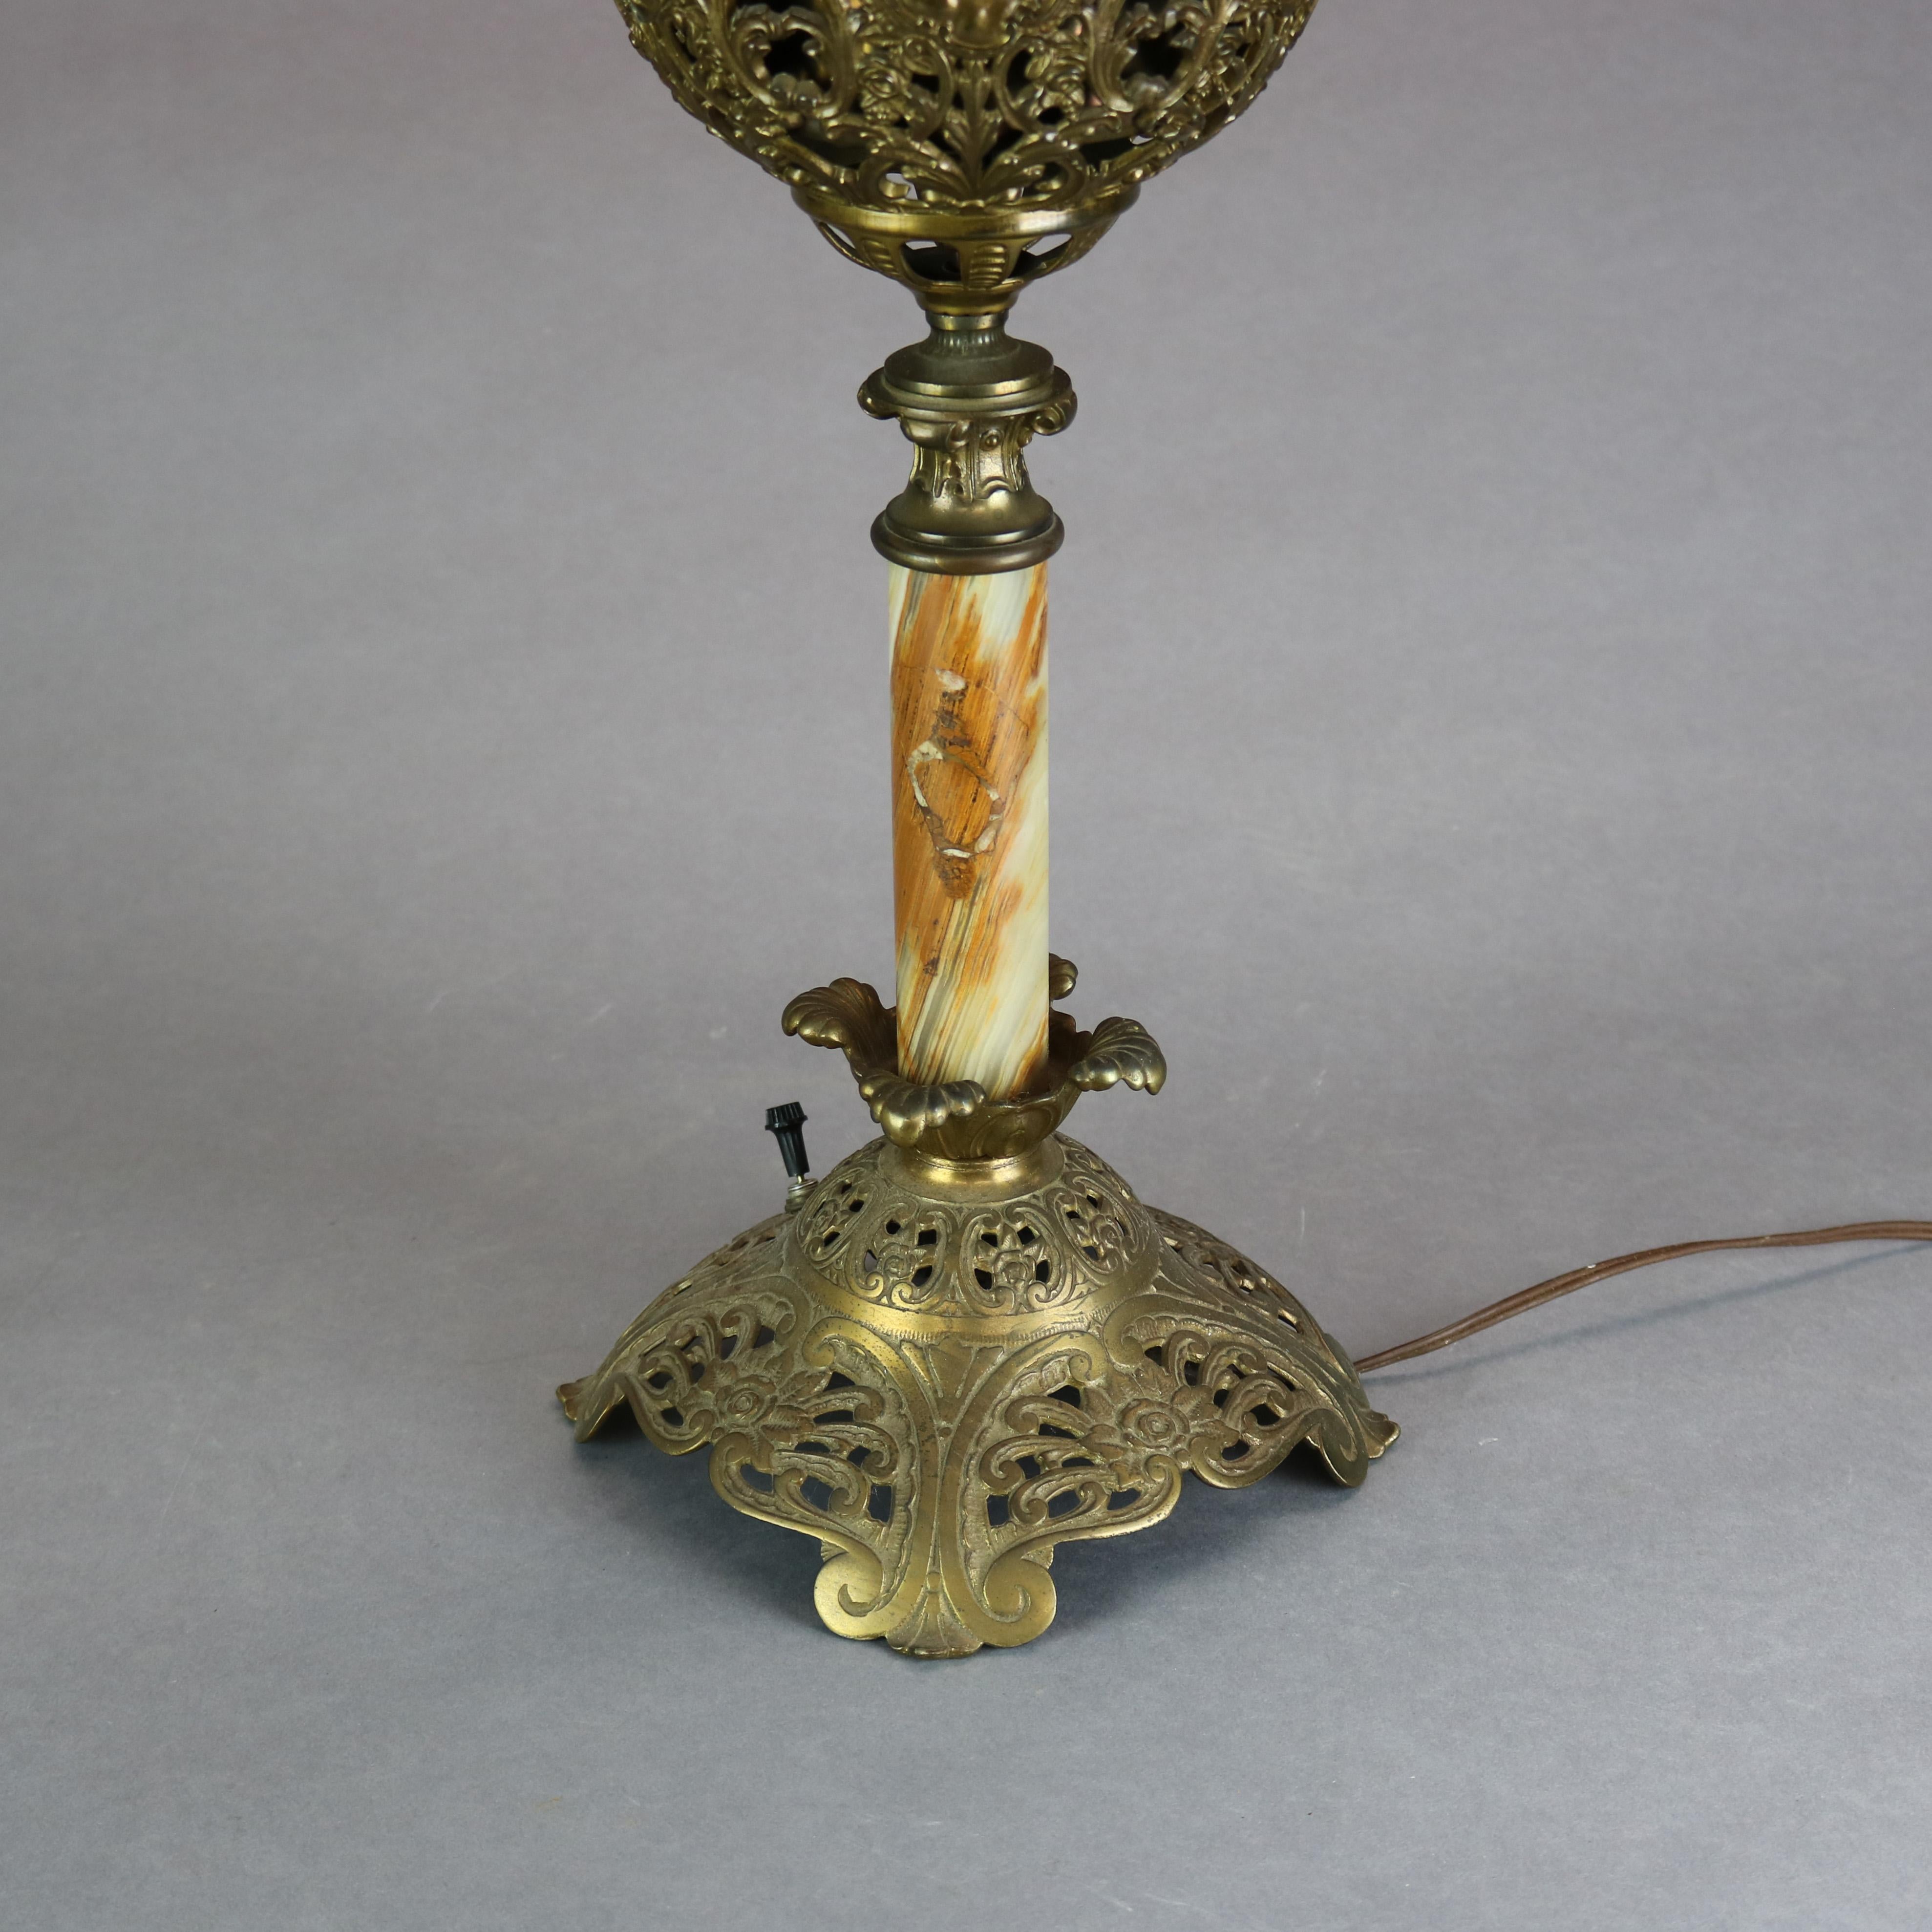 American Antique Victorian Bradley & Hubbard Gilt Metal & Onyx Parlor Lamp, c1890